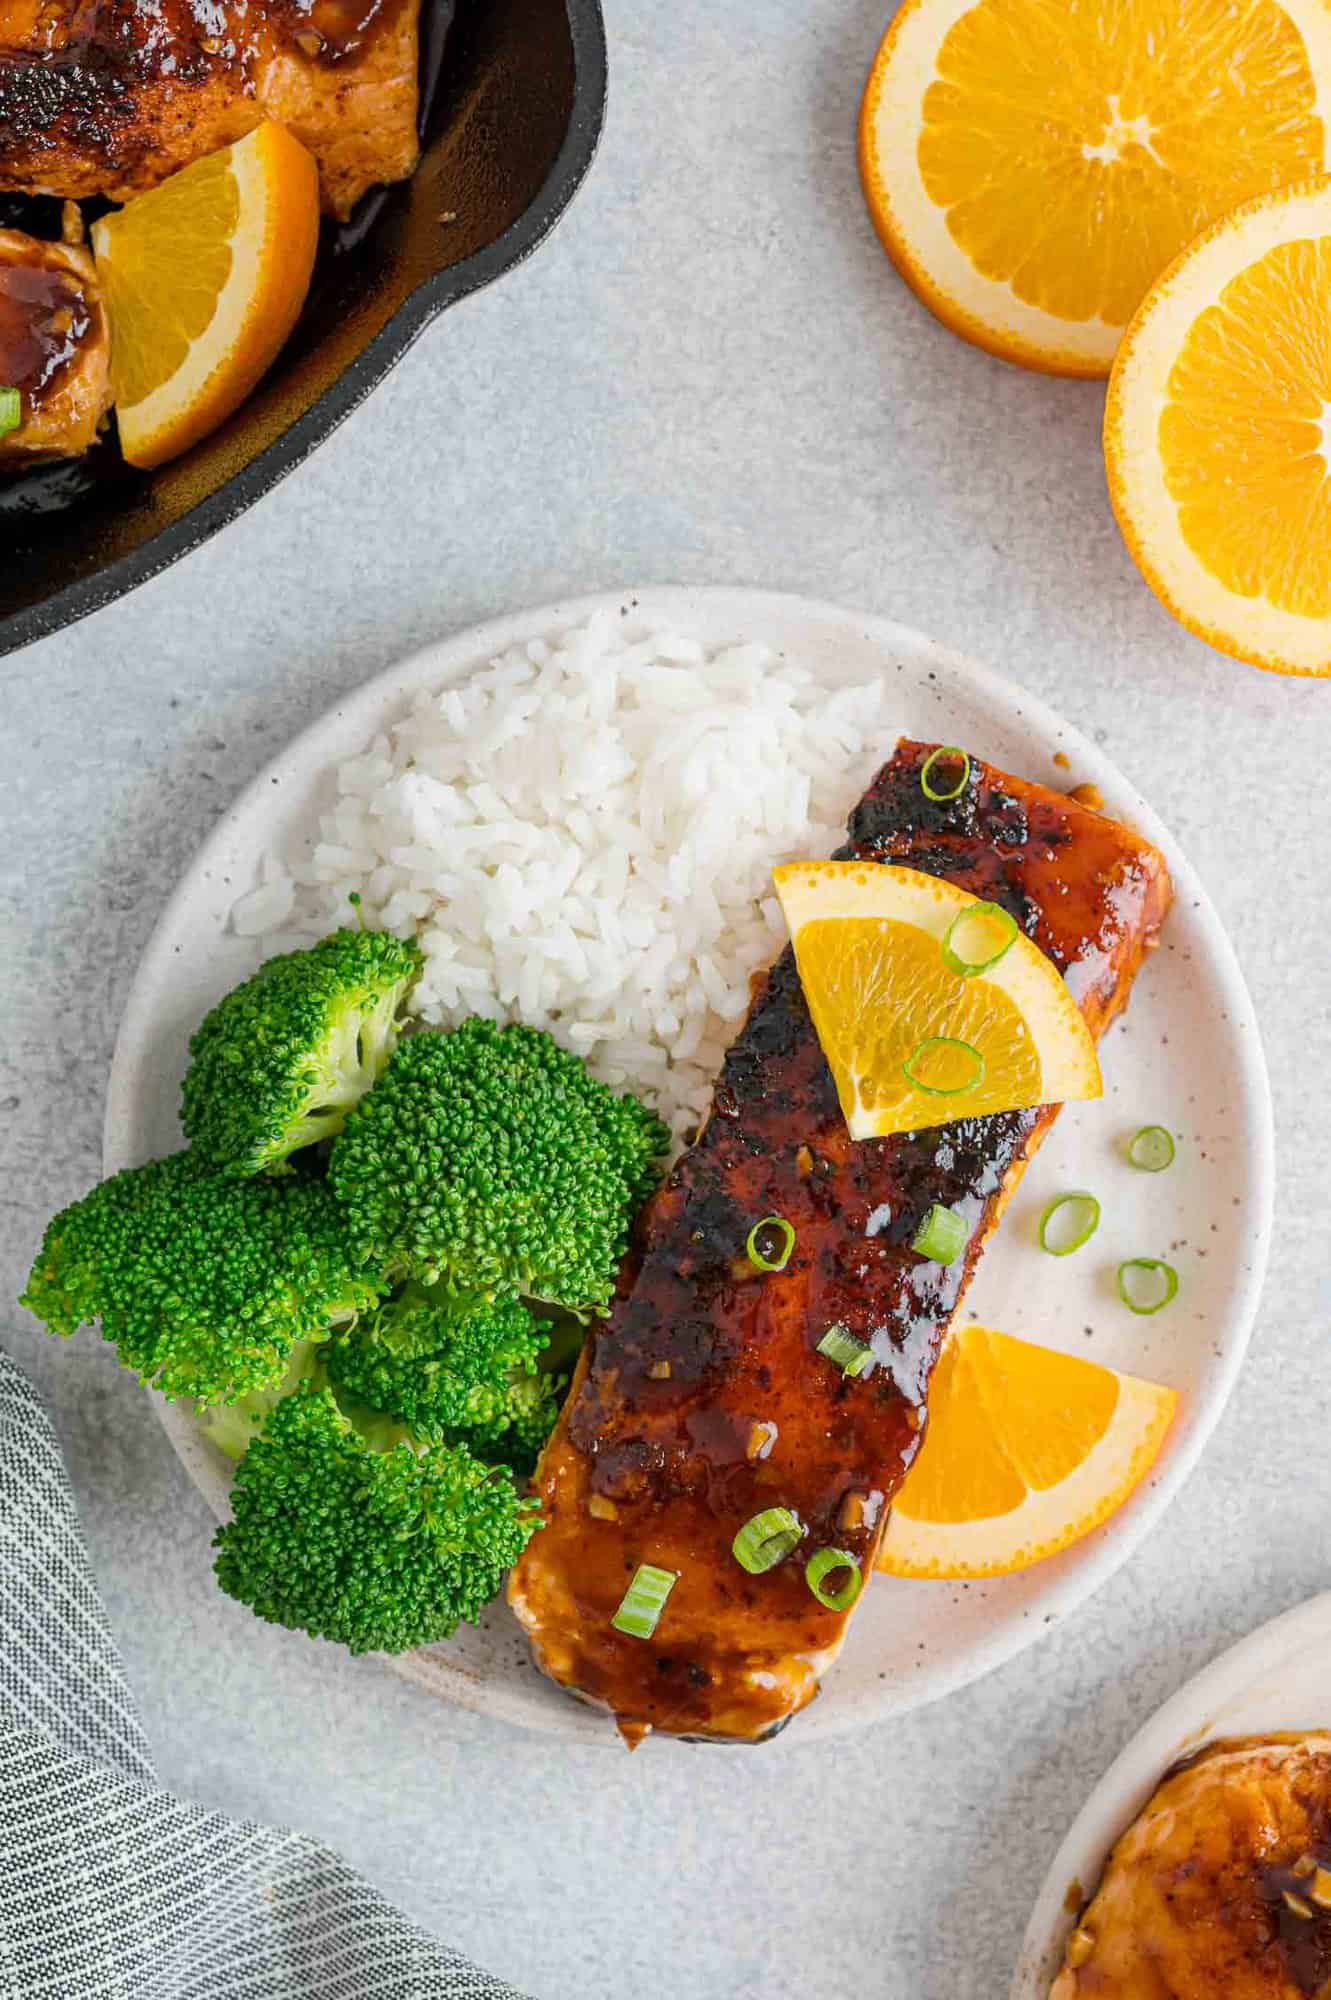 Orange glazed salmon a plate with rice and broccoli.